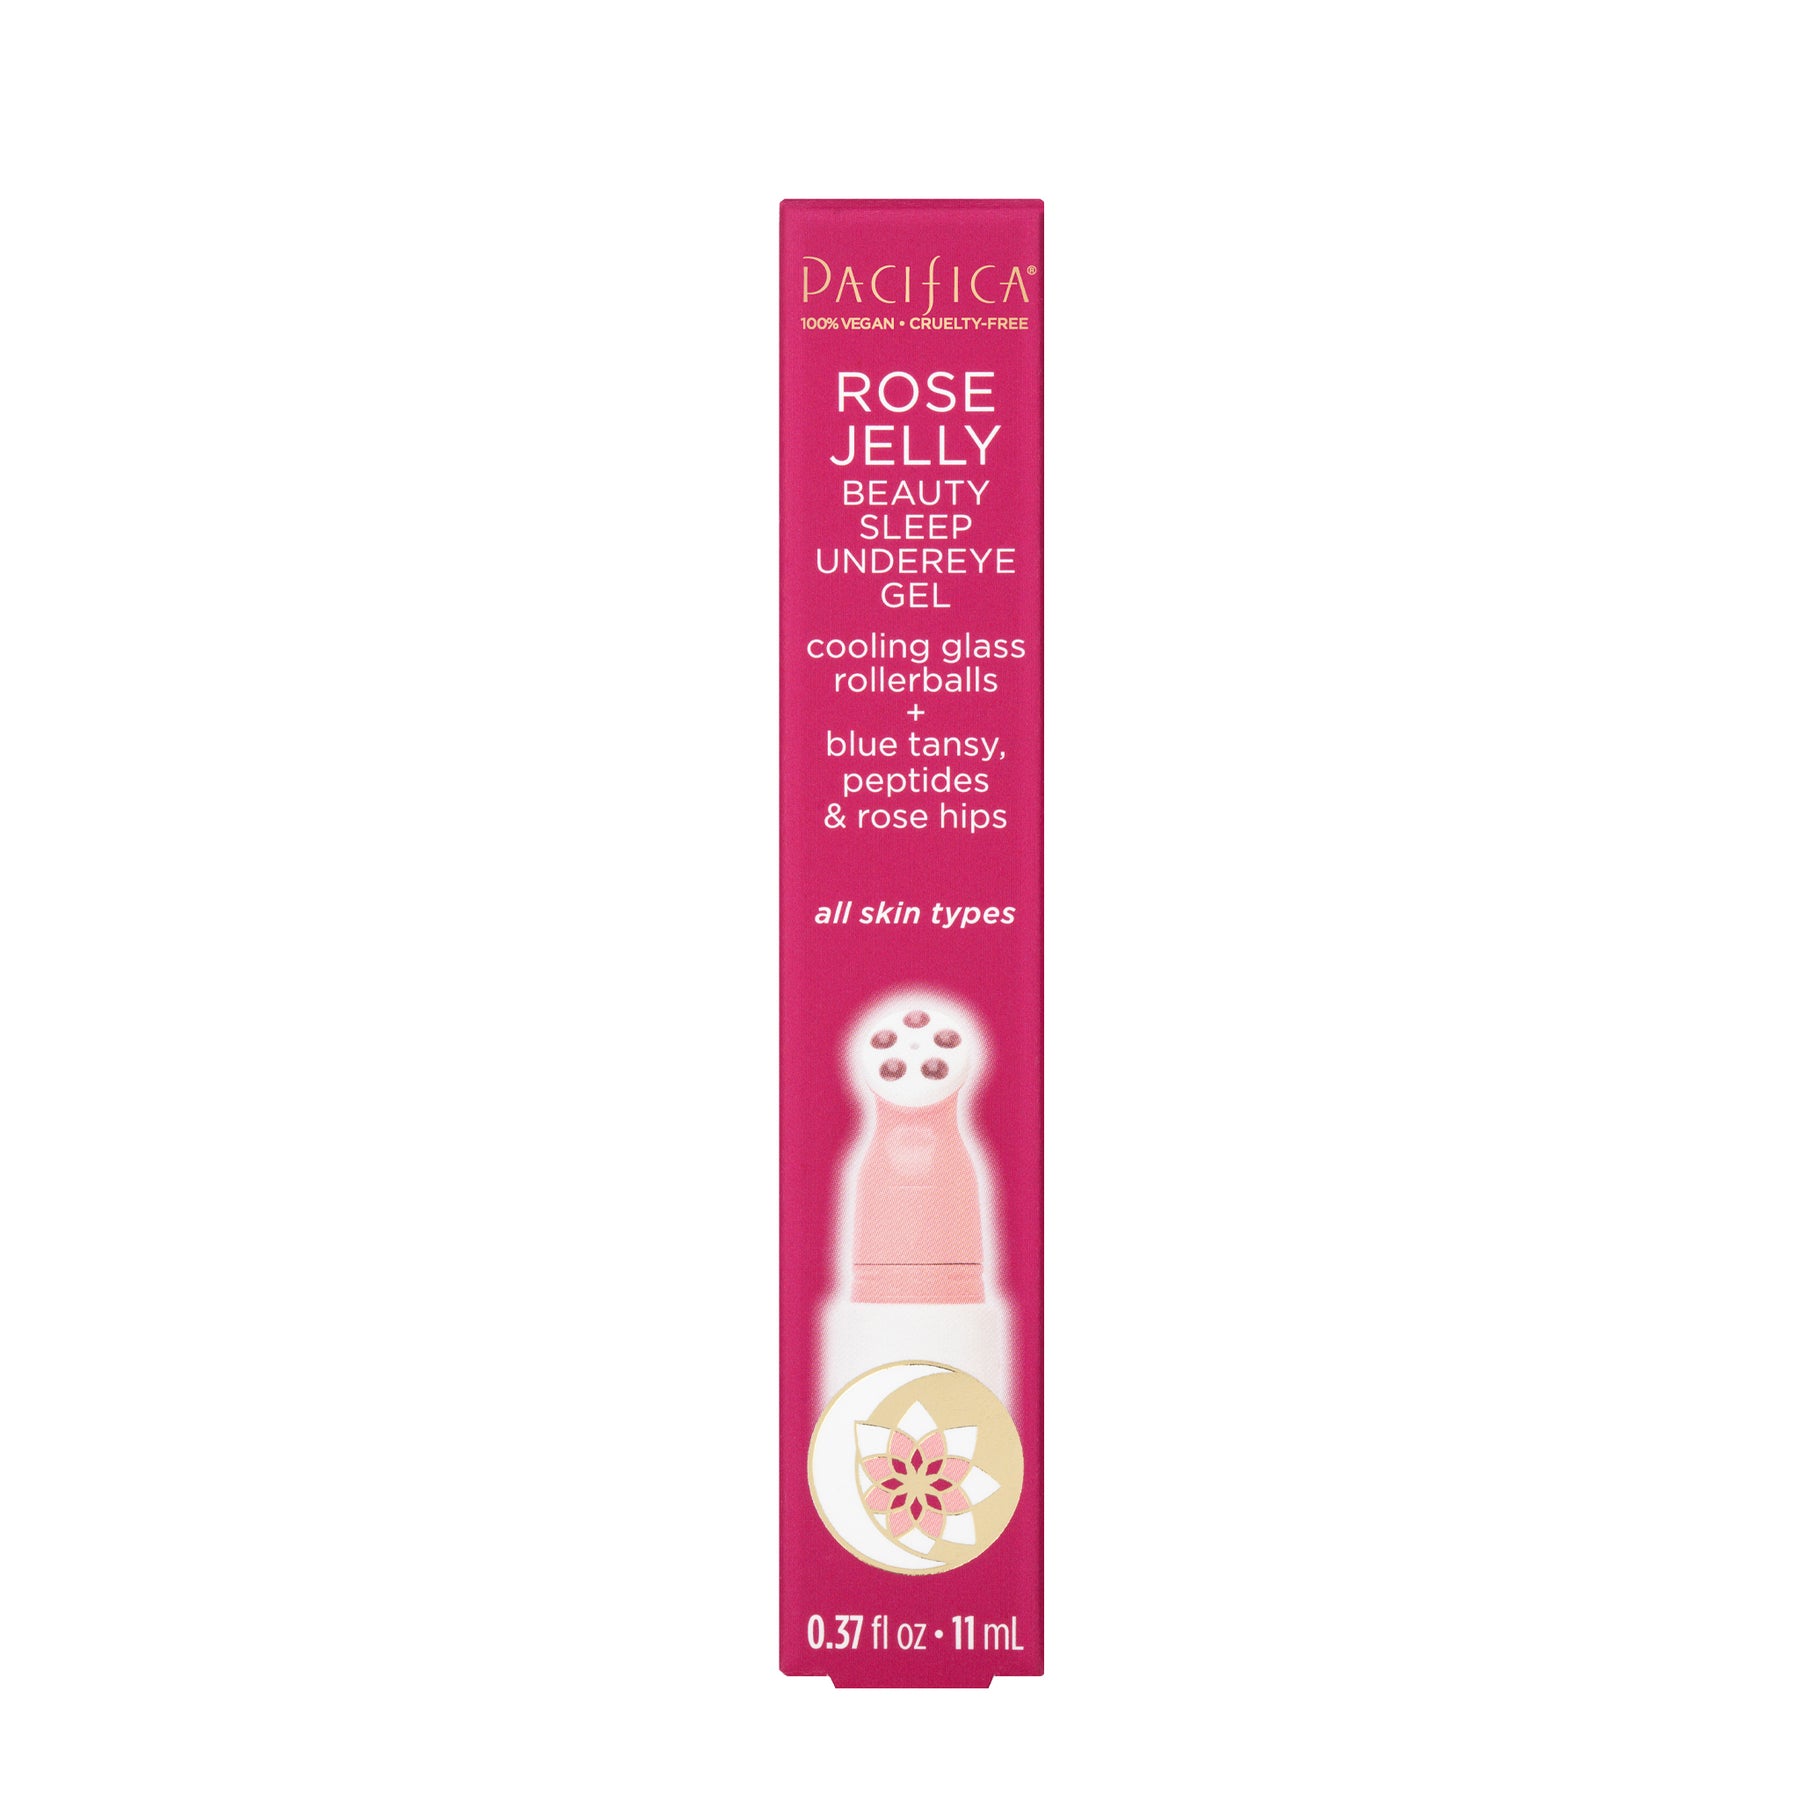 Rose Jelly Beauty Sleep Undereye Gel - Skin Care - Pacifica Beauty